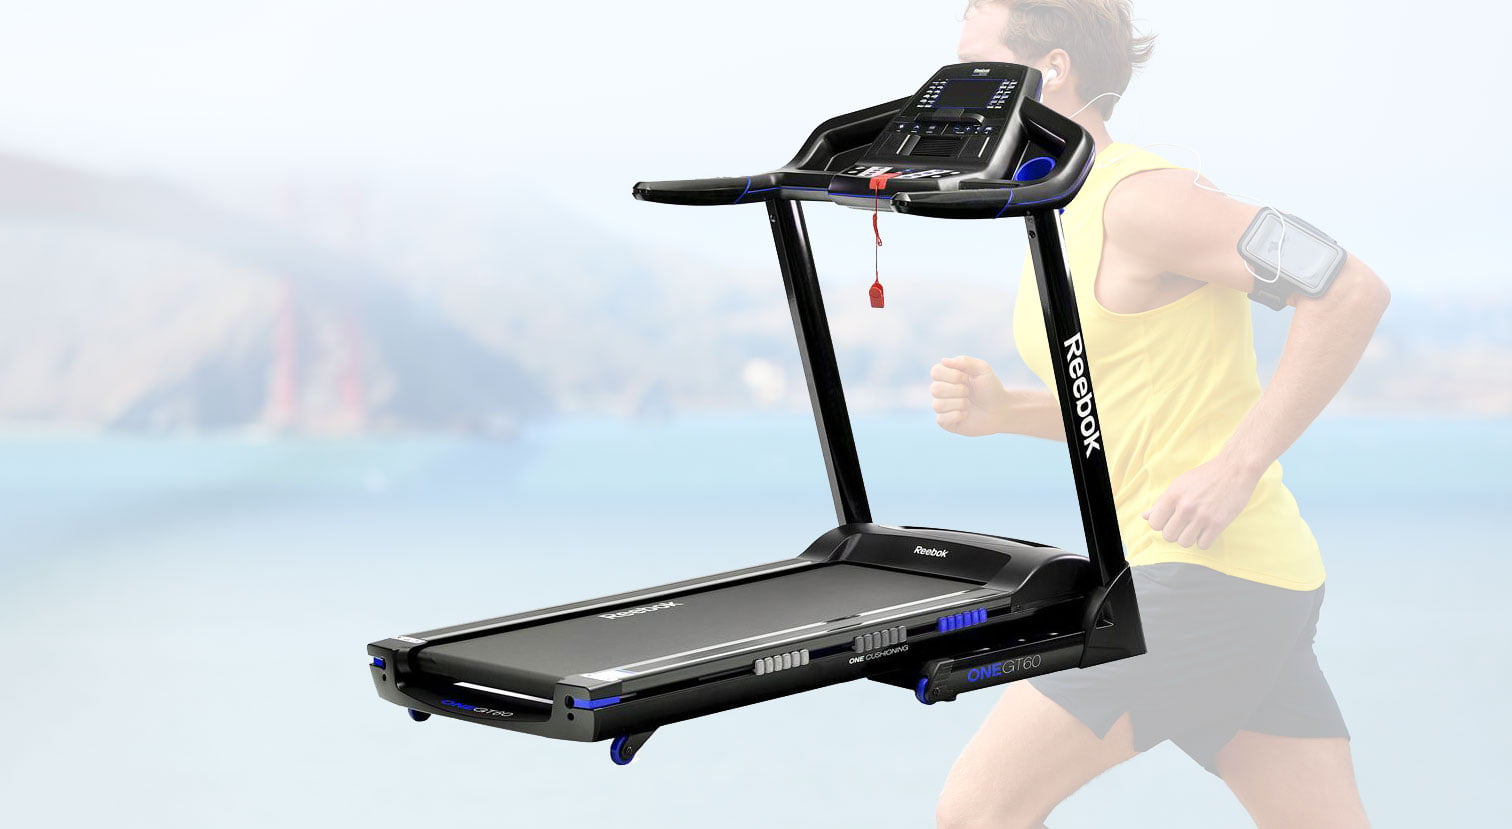 reebok gt60 treadmill review